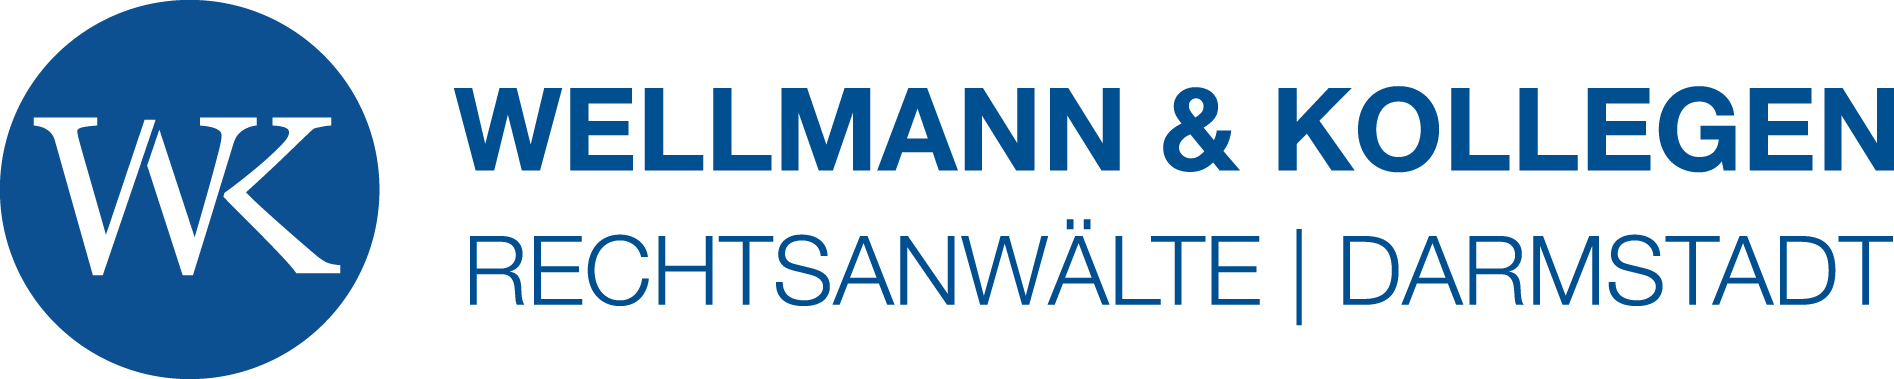 Wellmann & Kollegen - Rechtsanwälte - Darmstadt